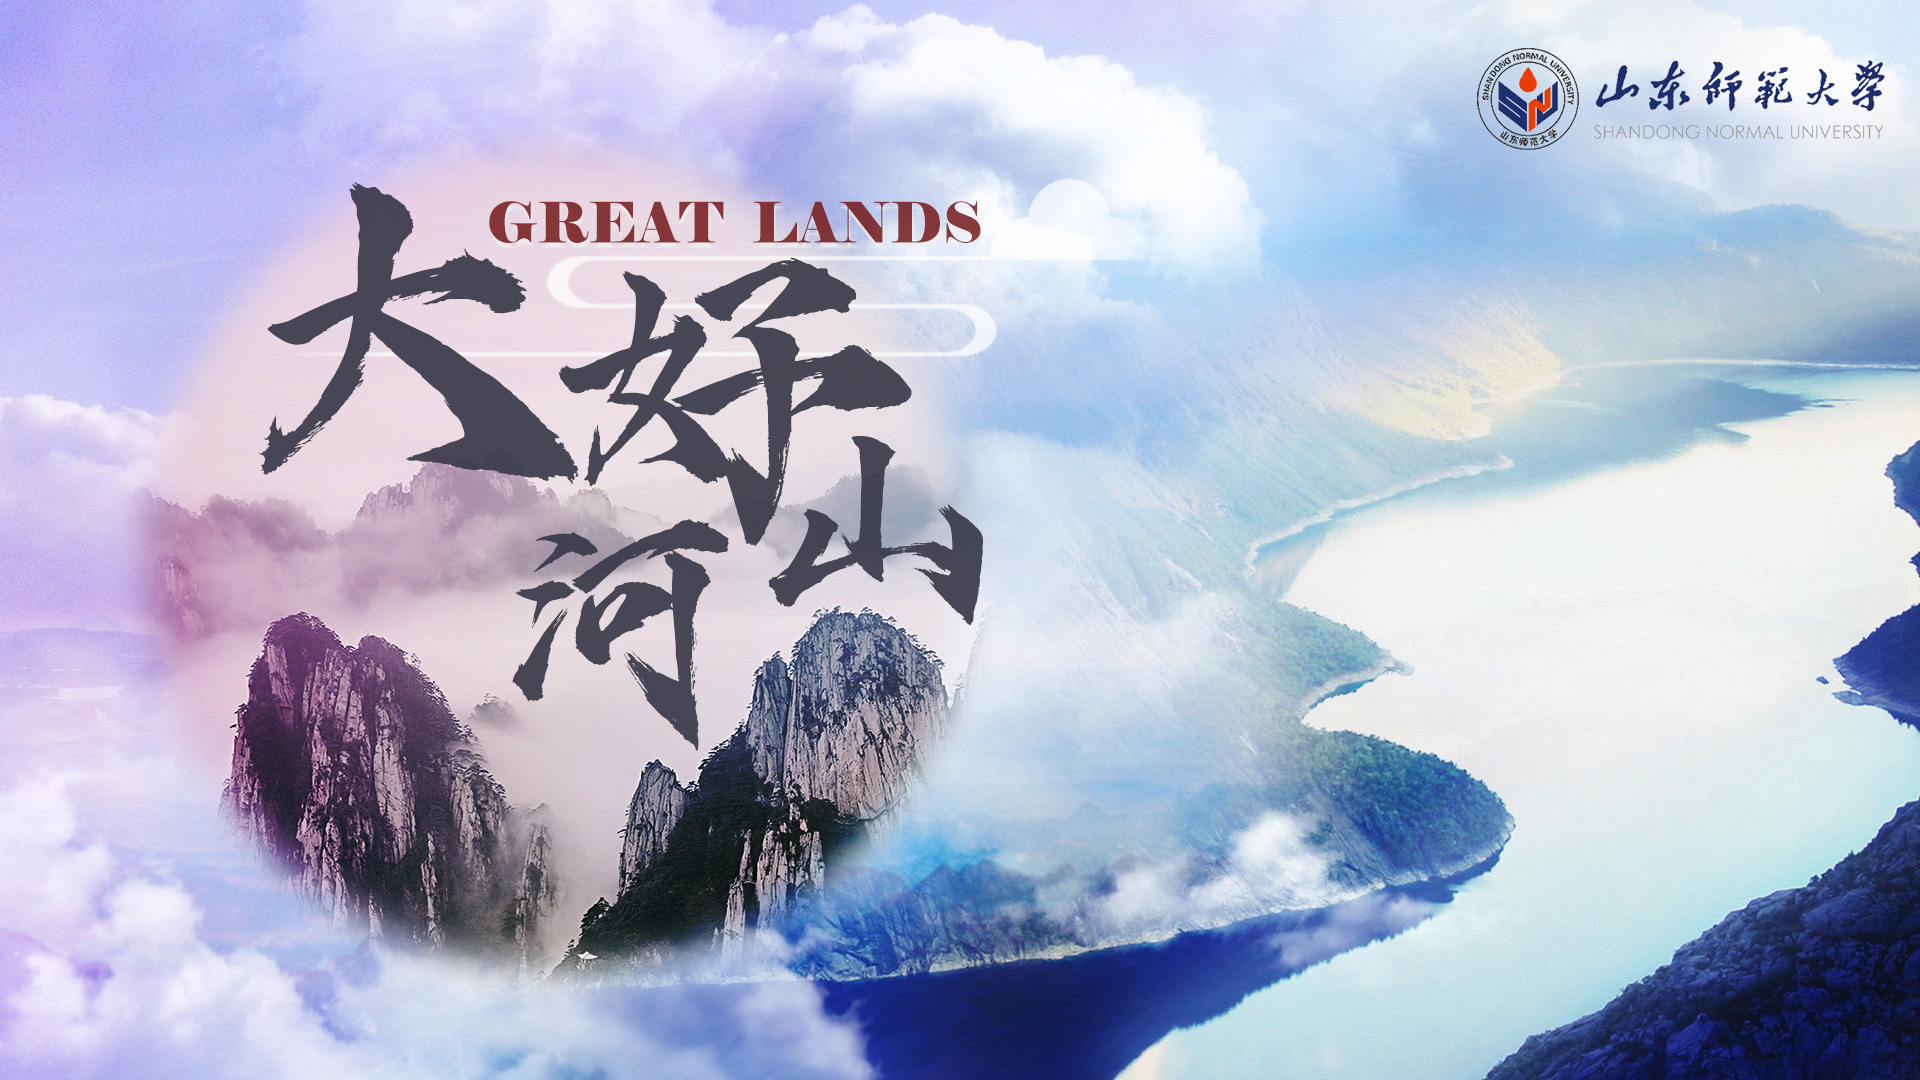 Great lands